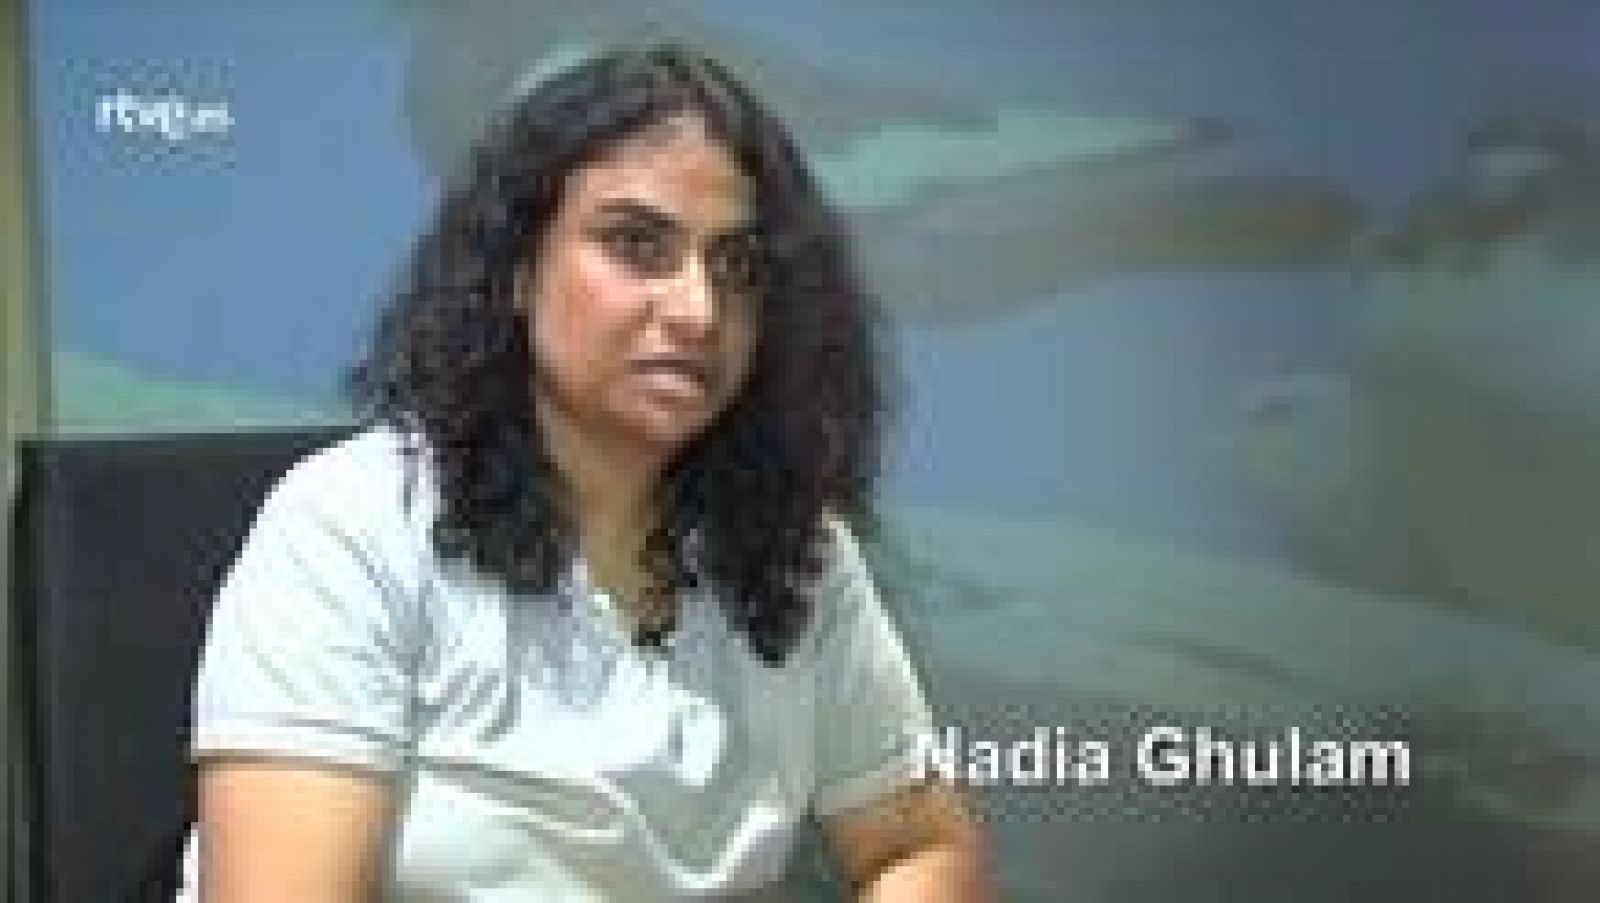 Atención obras: Nadia Ghulam: entrevista completa | RTVE Play